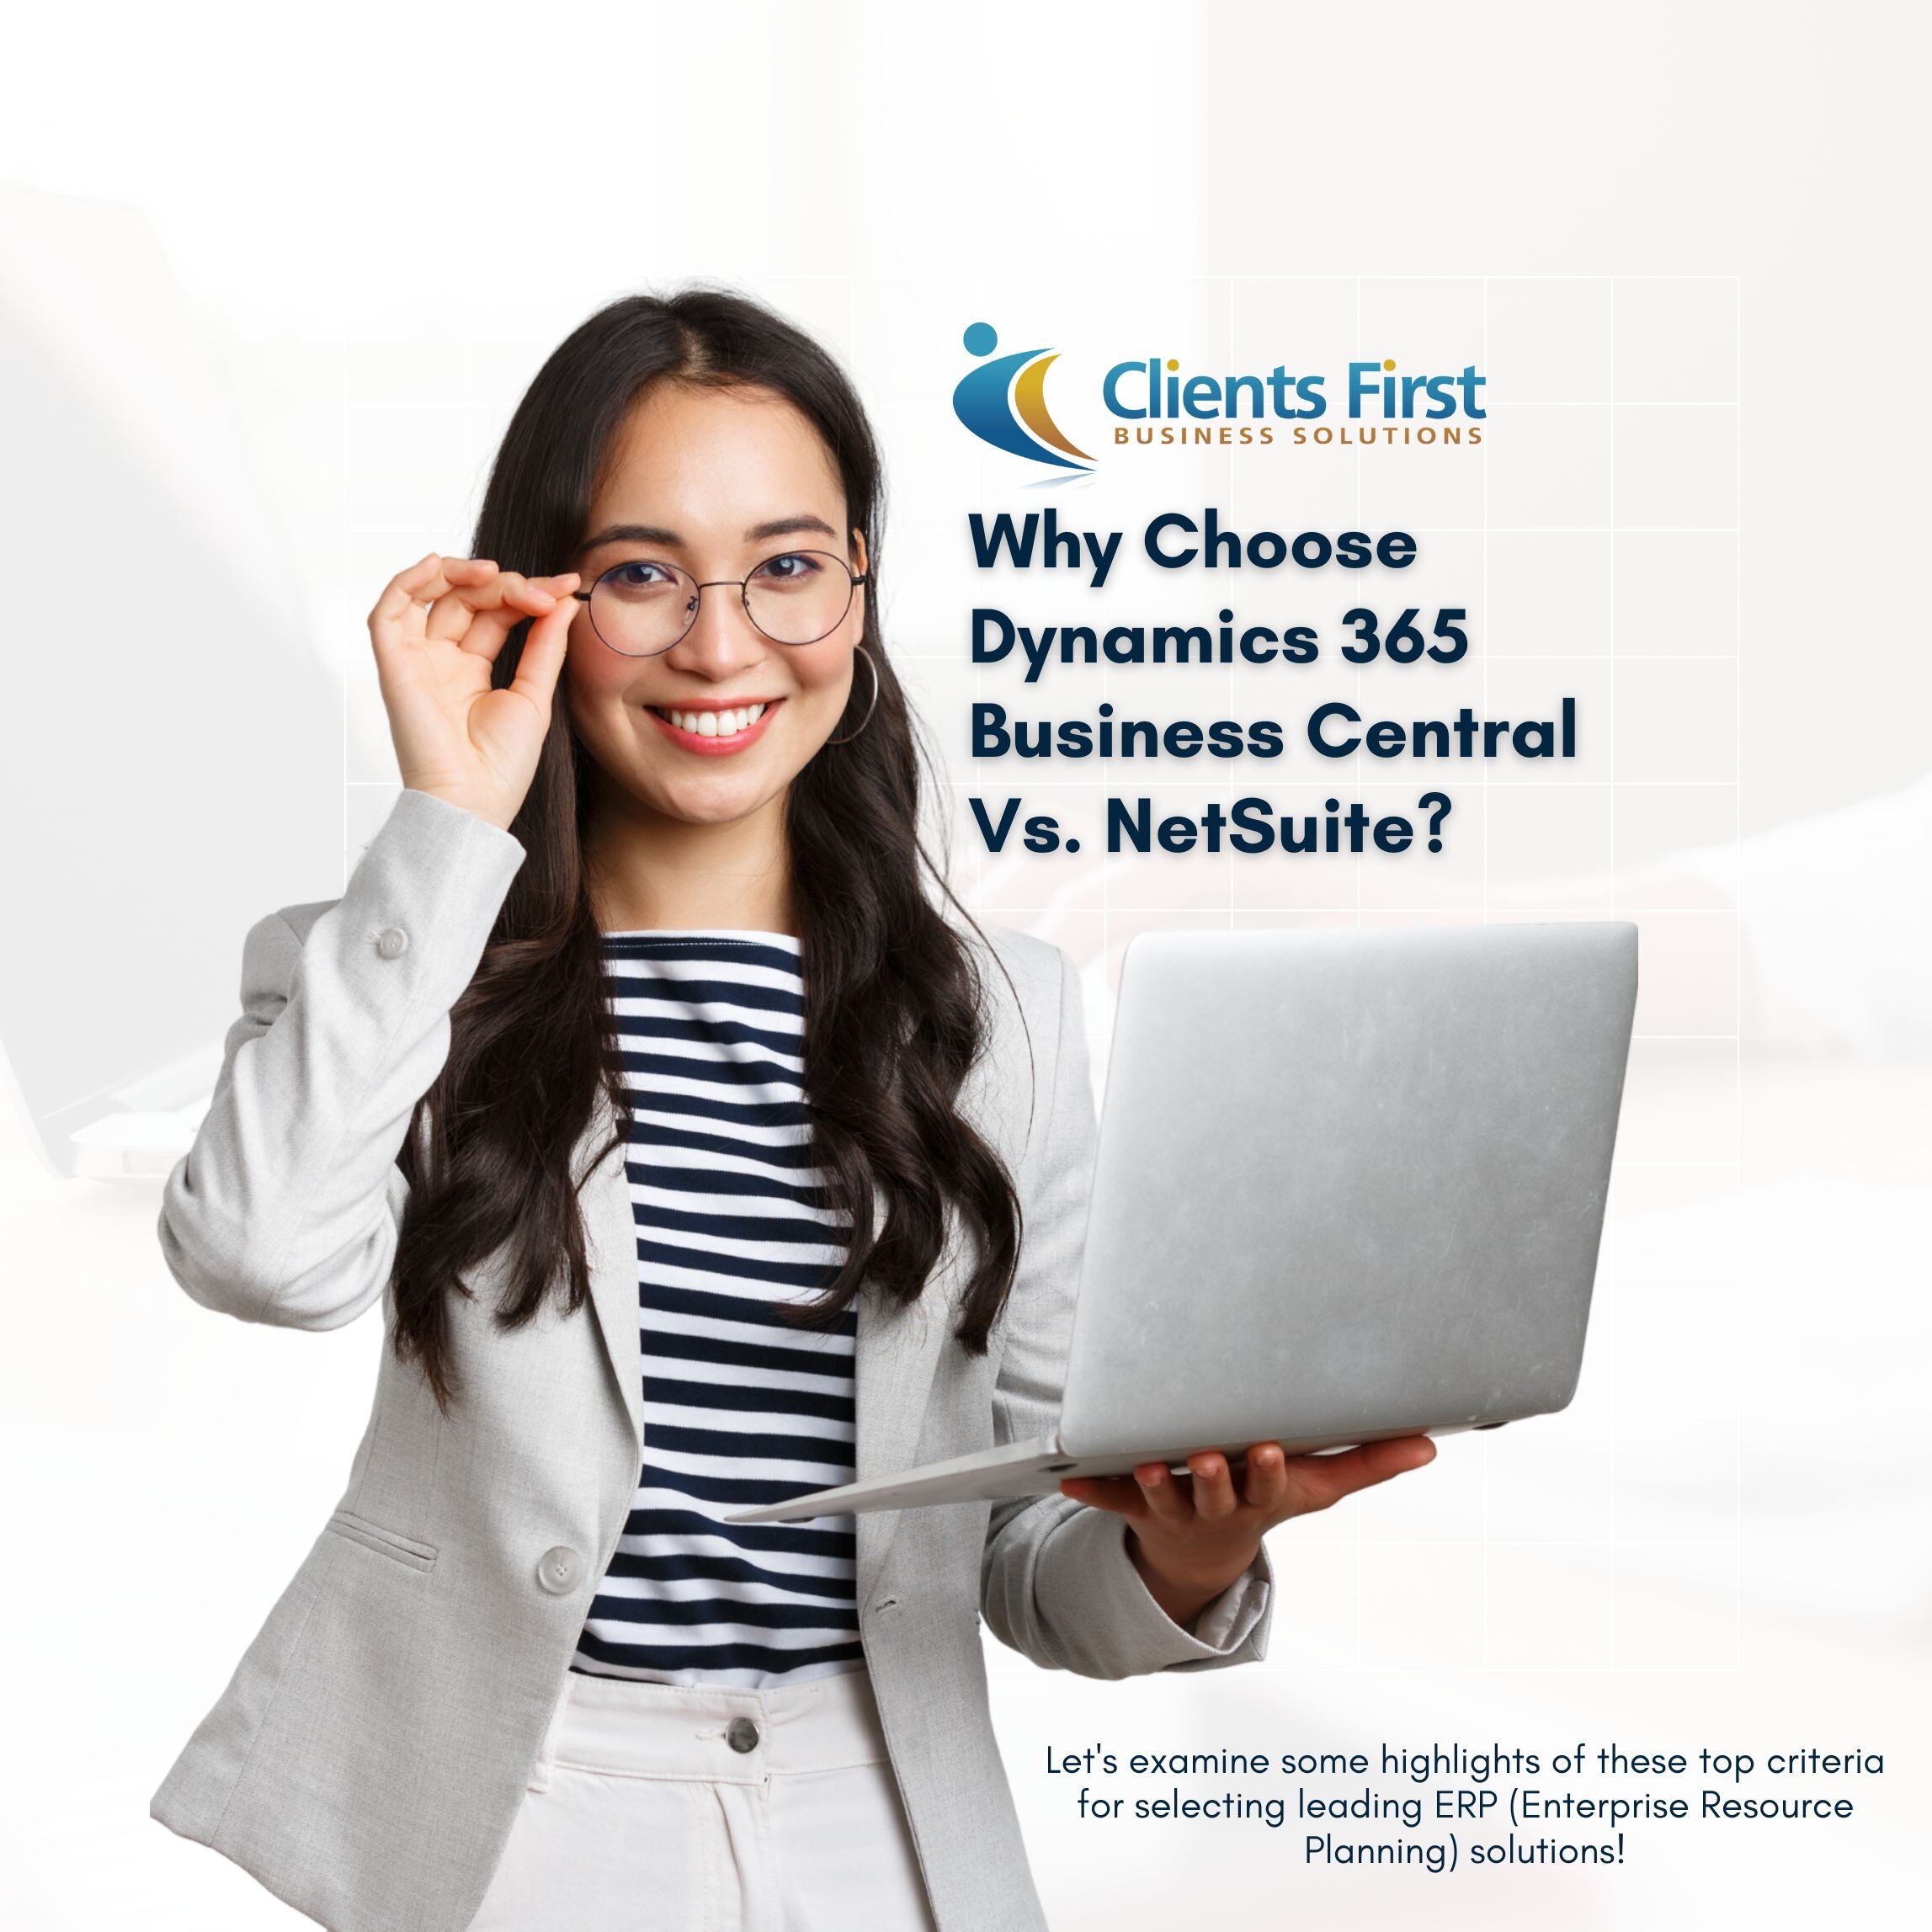 Dynamics 365 Business Central vs NetSuite